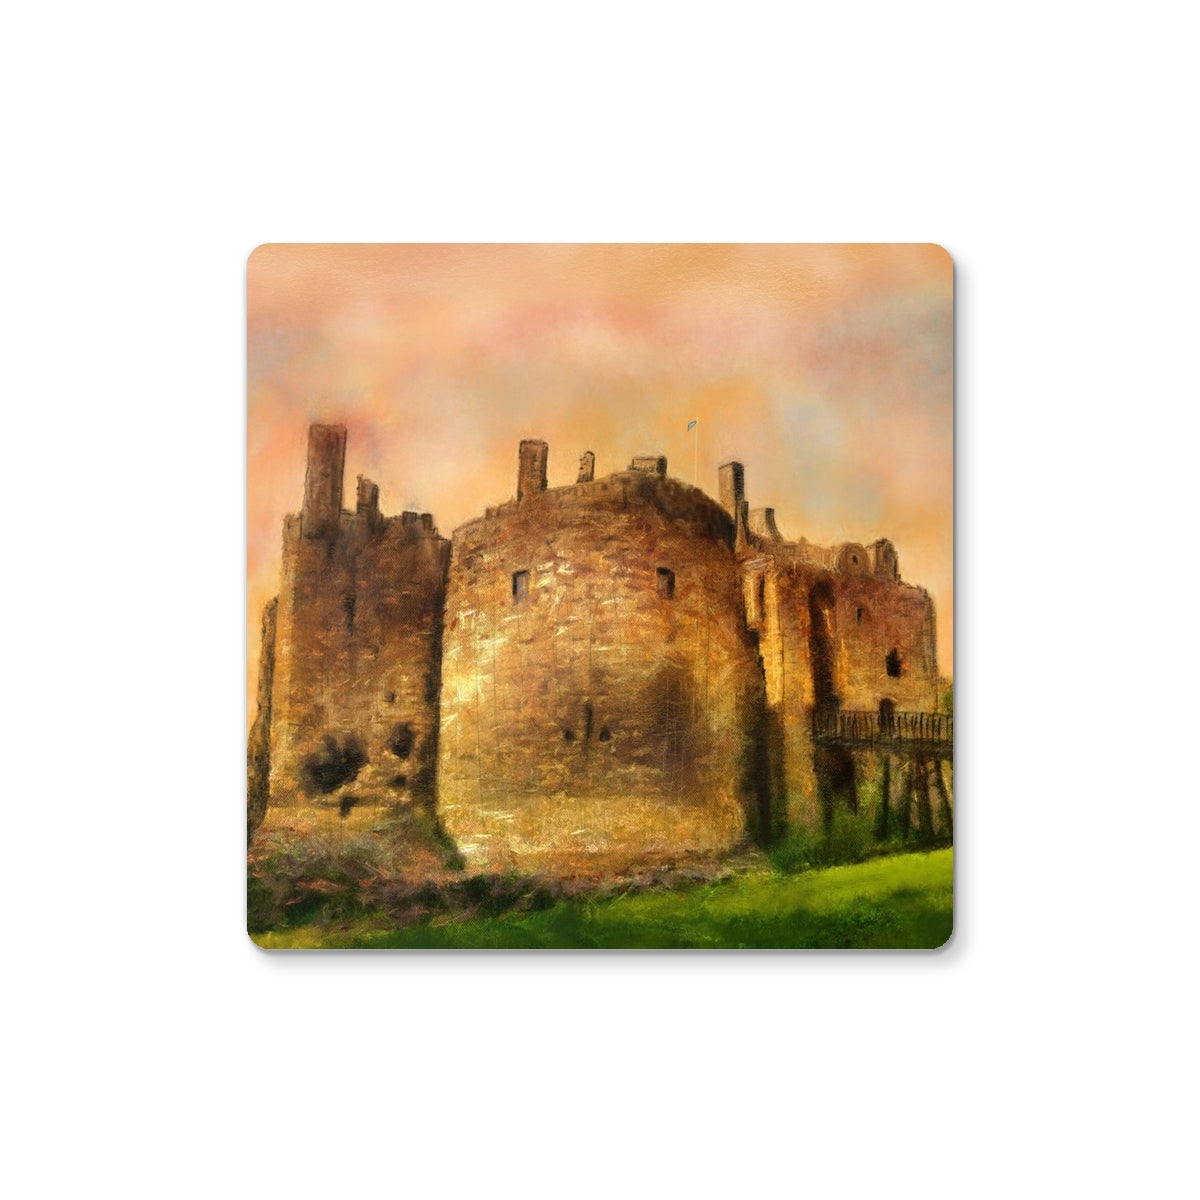 Dirleton Castle Art Gifts Coaster-Homeware-Prodigi-2 Coasters-Paintings, Prints, Homeware, Art Gifts From Scotland By Scottish Artist Kevin Hunter